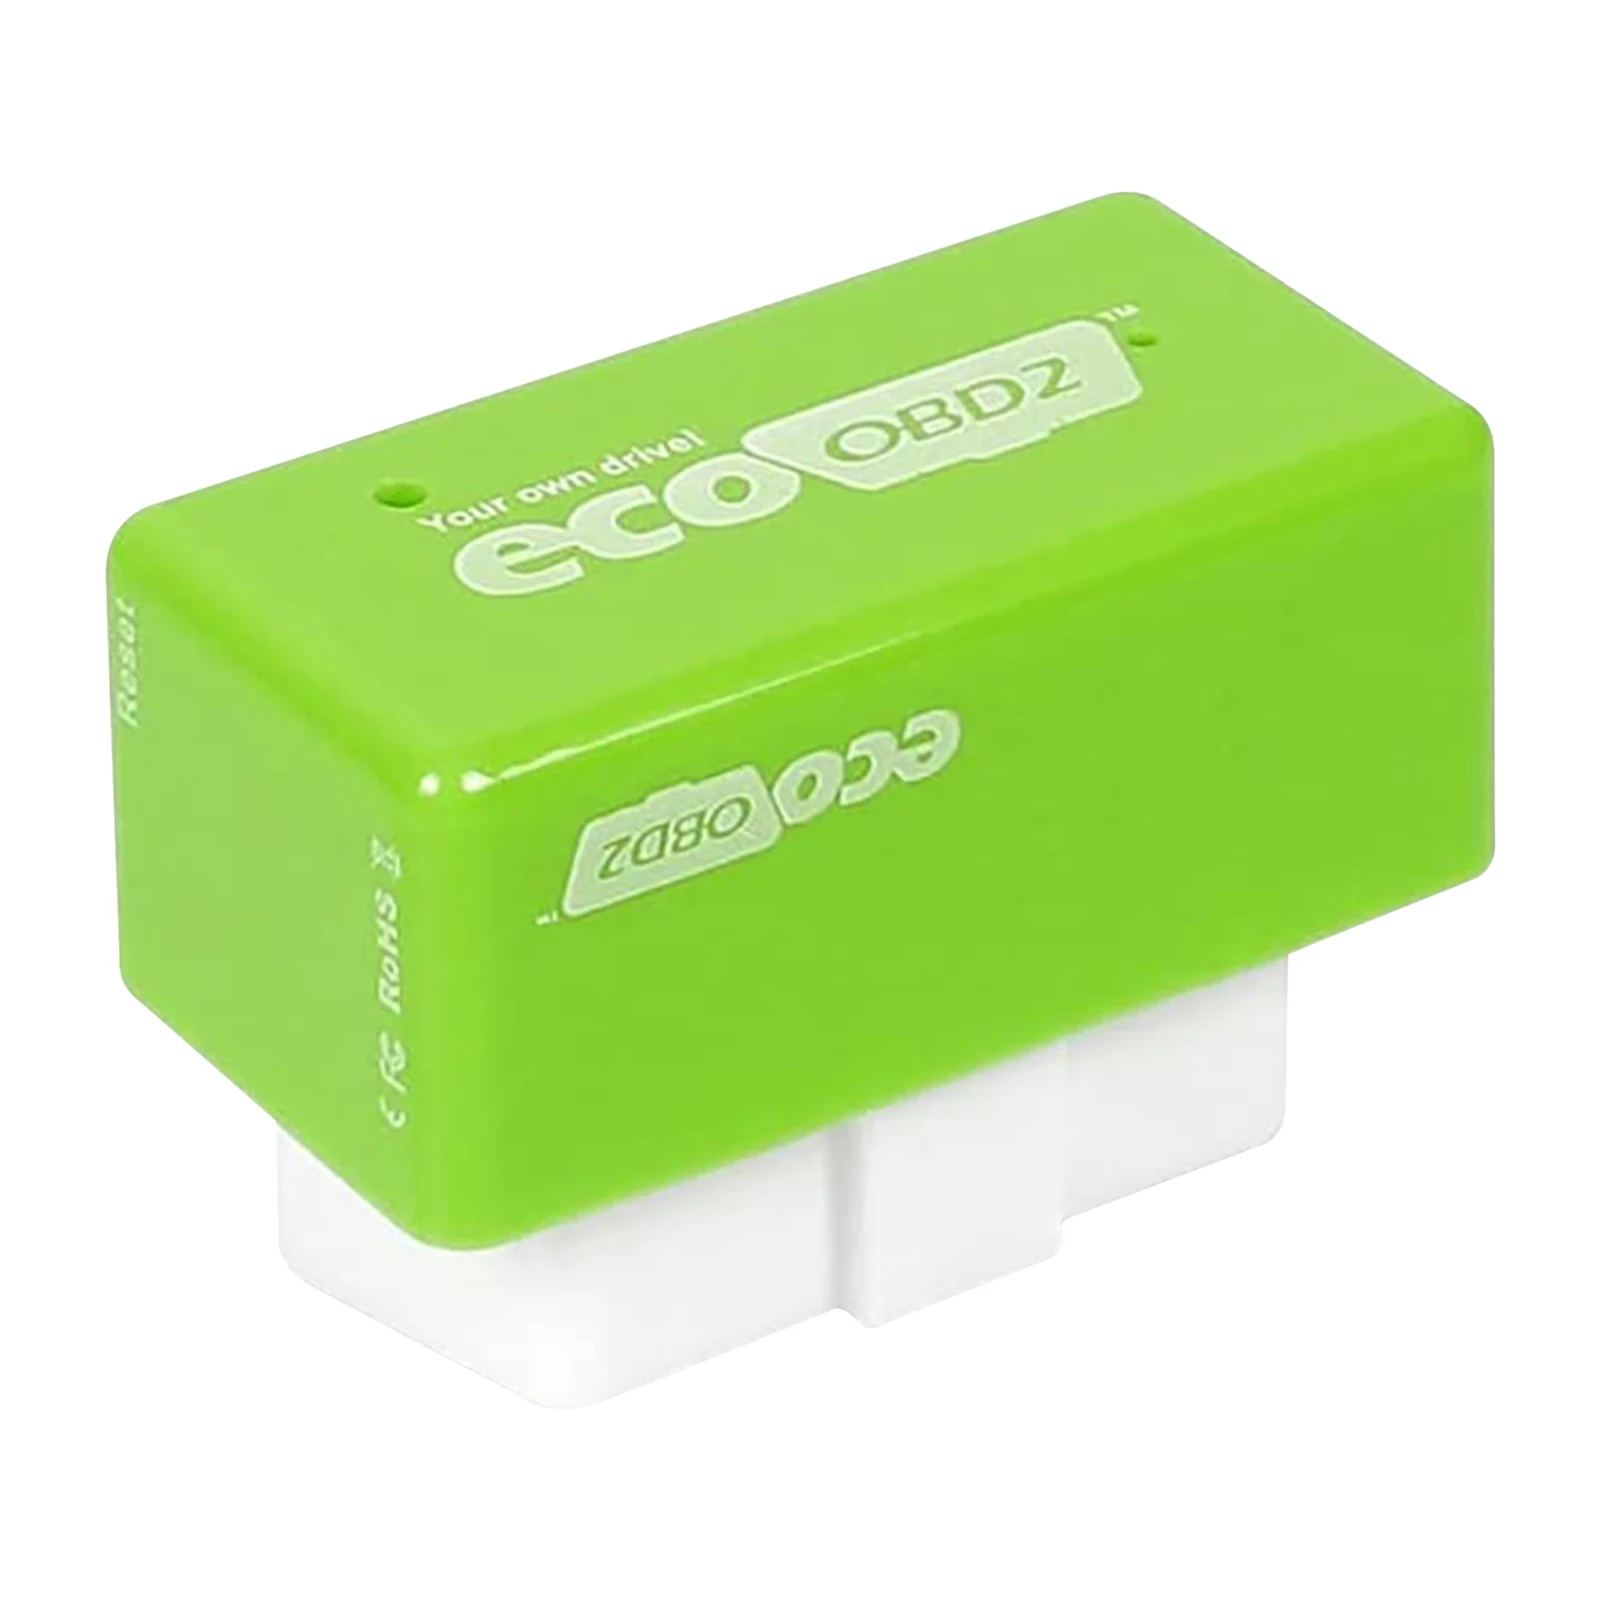 Eco OBD OBD2 Economy Fuel Saver Tuning Box Chip For Petrol Car Auto Gas Saving 